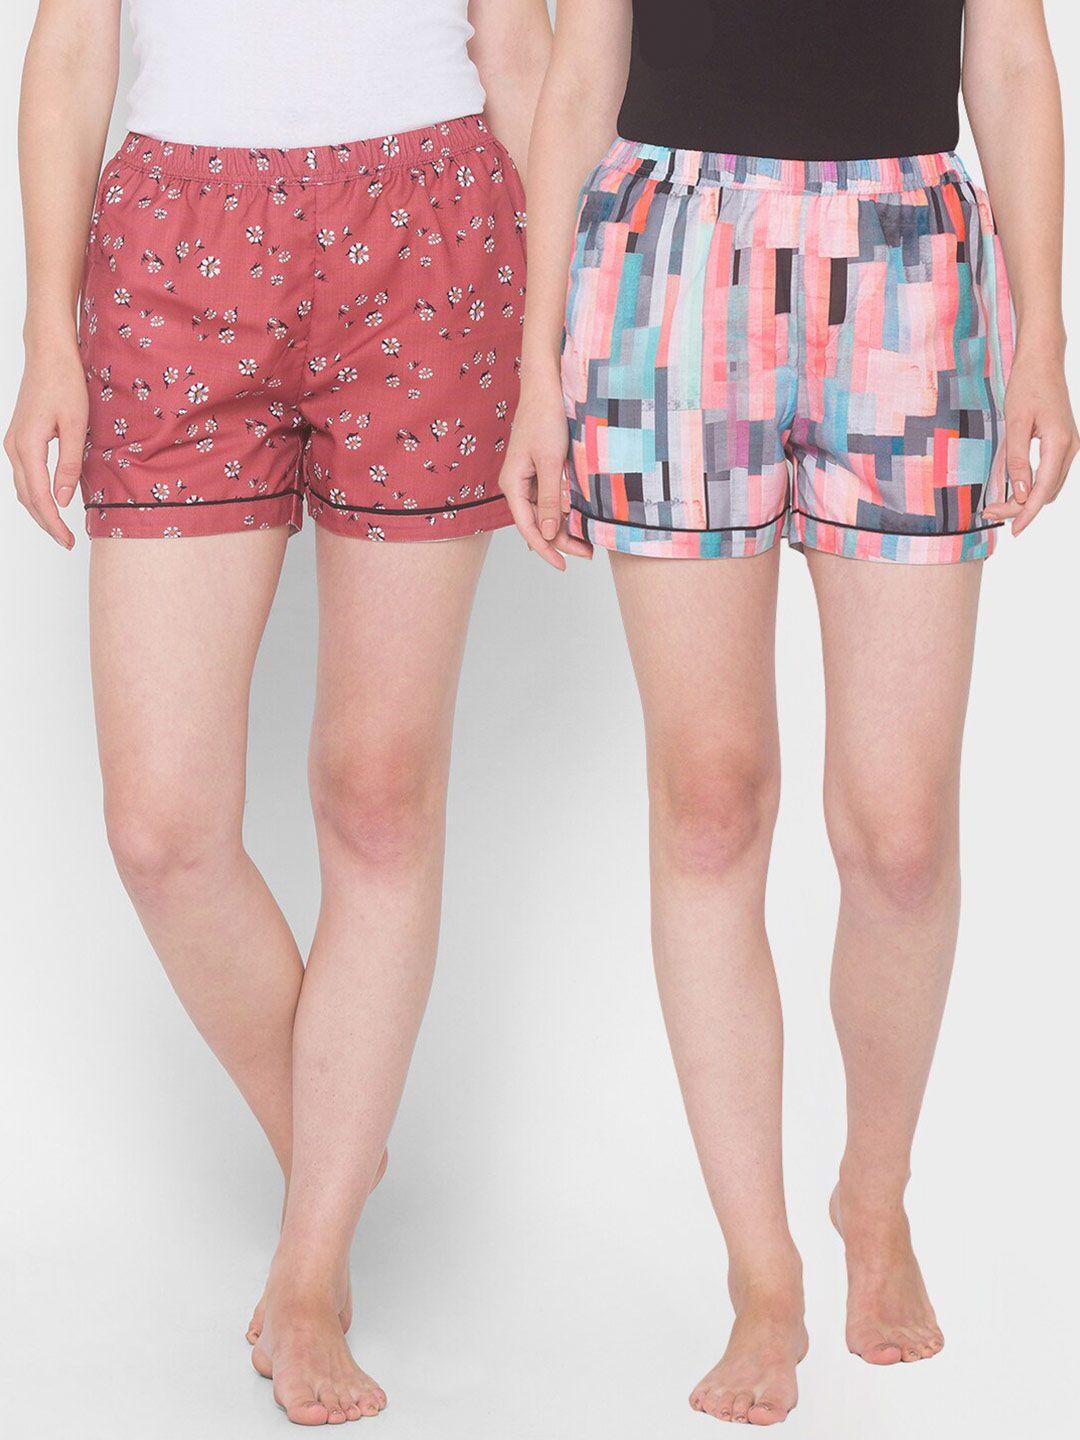 fashionrack women set of 2 red & blue printed lounge shorts